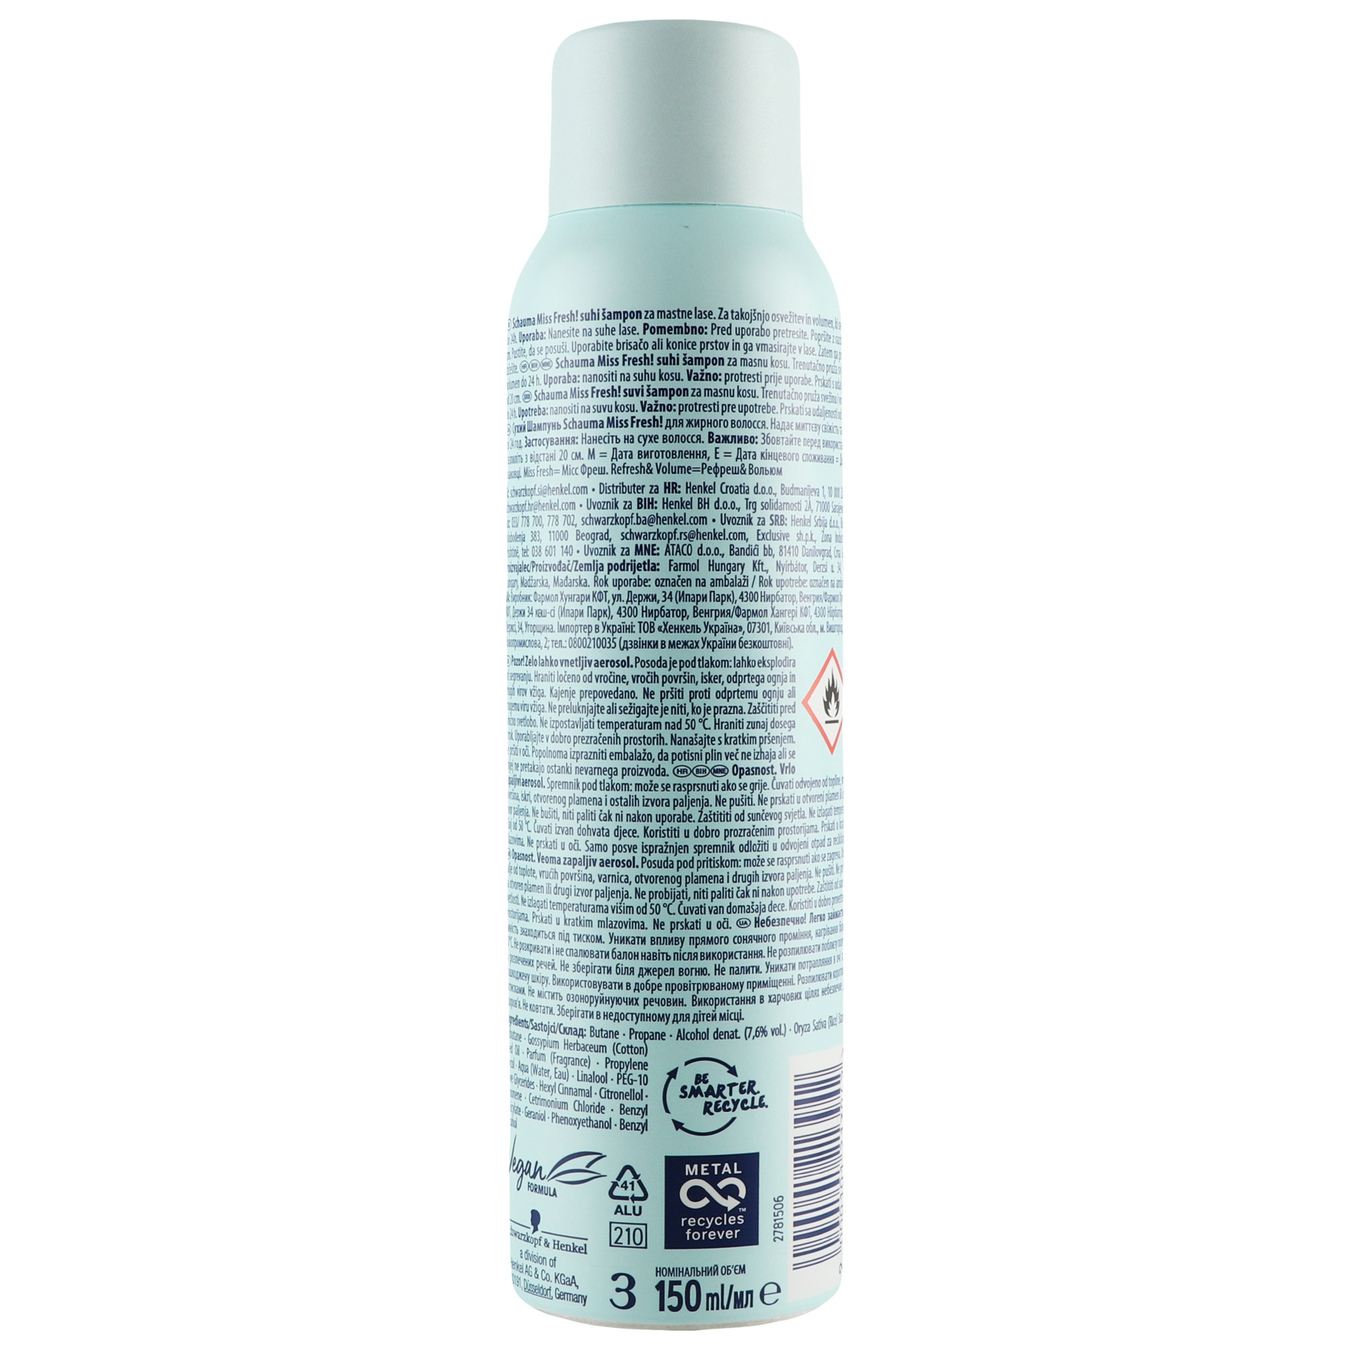 Shampoo Schauma Miss Fresh! for oily hair dry 150ml 2